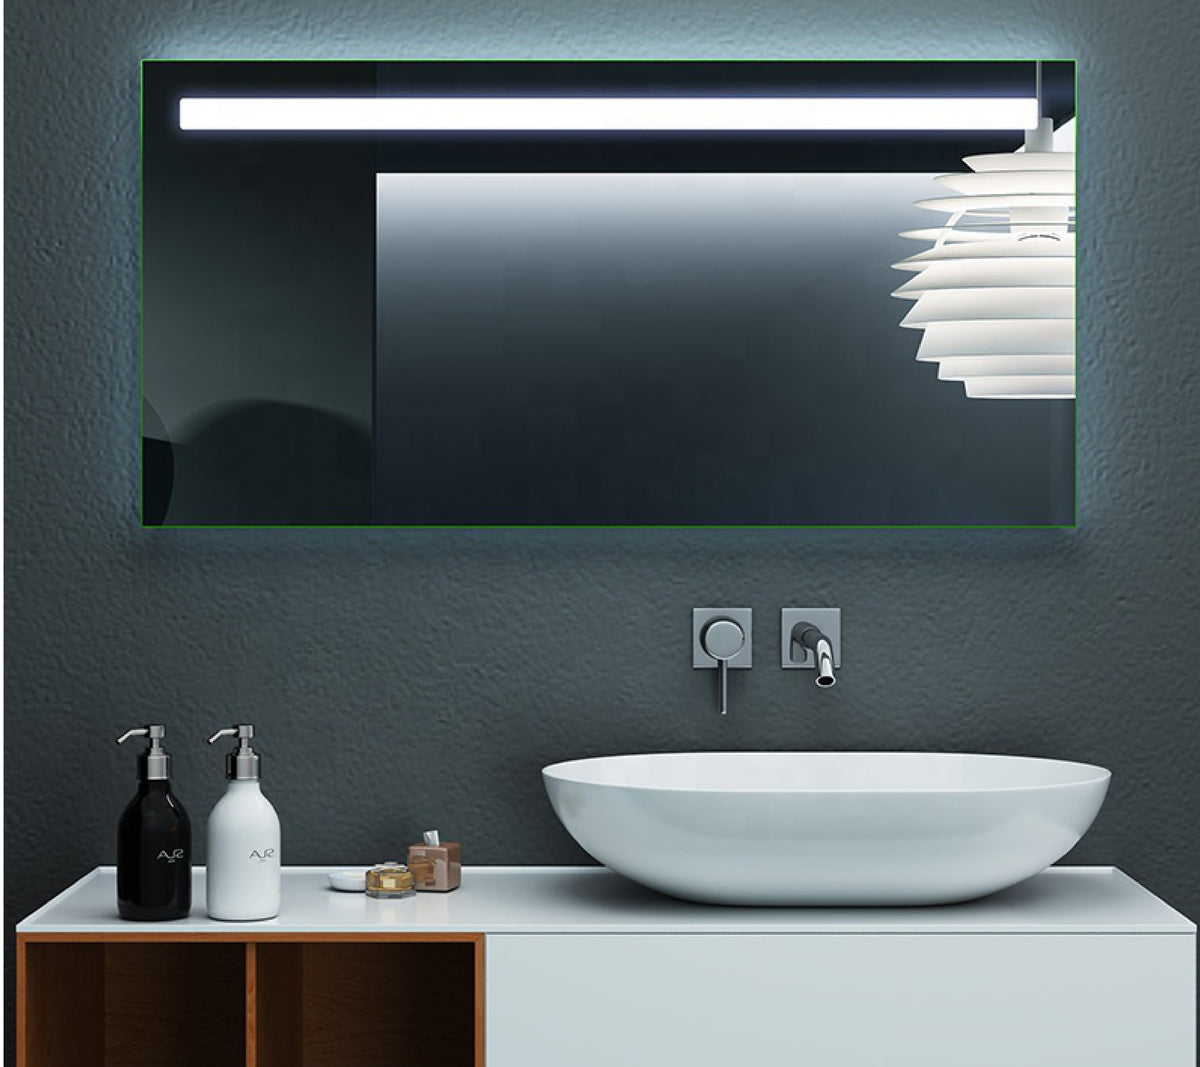 smilesellers Decorative 3 Color Led Mirror for Bathroom, Bedroom, Washbasin, Home Makeup led Light Mirror , Backlit Mirror